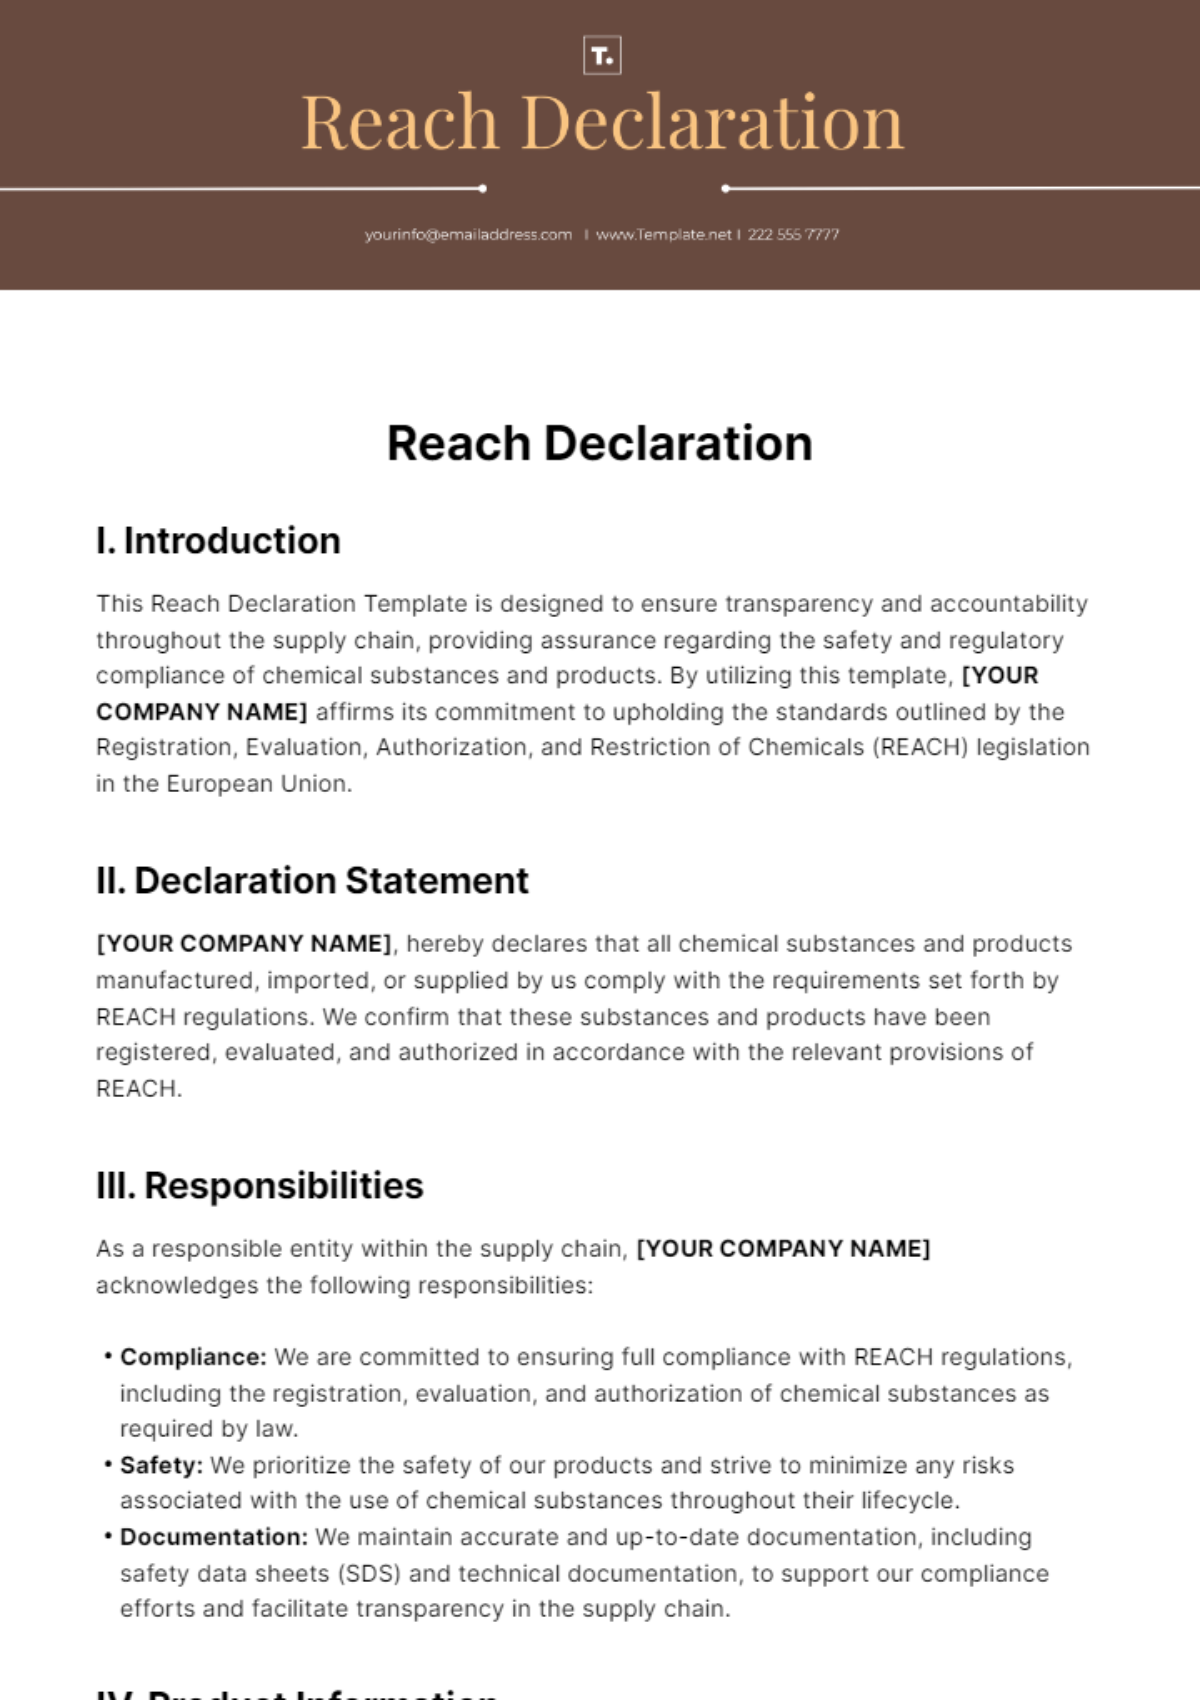 Reach Declaration Template